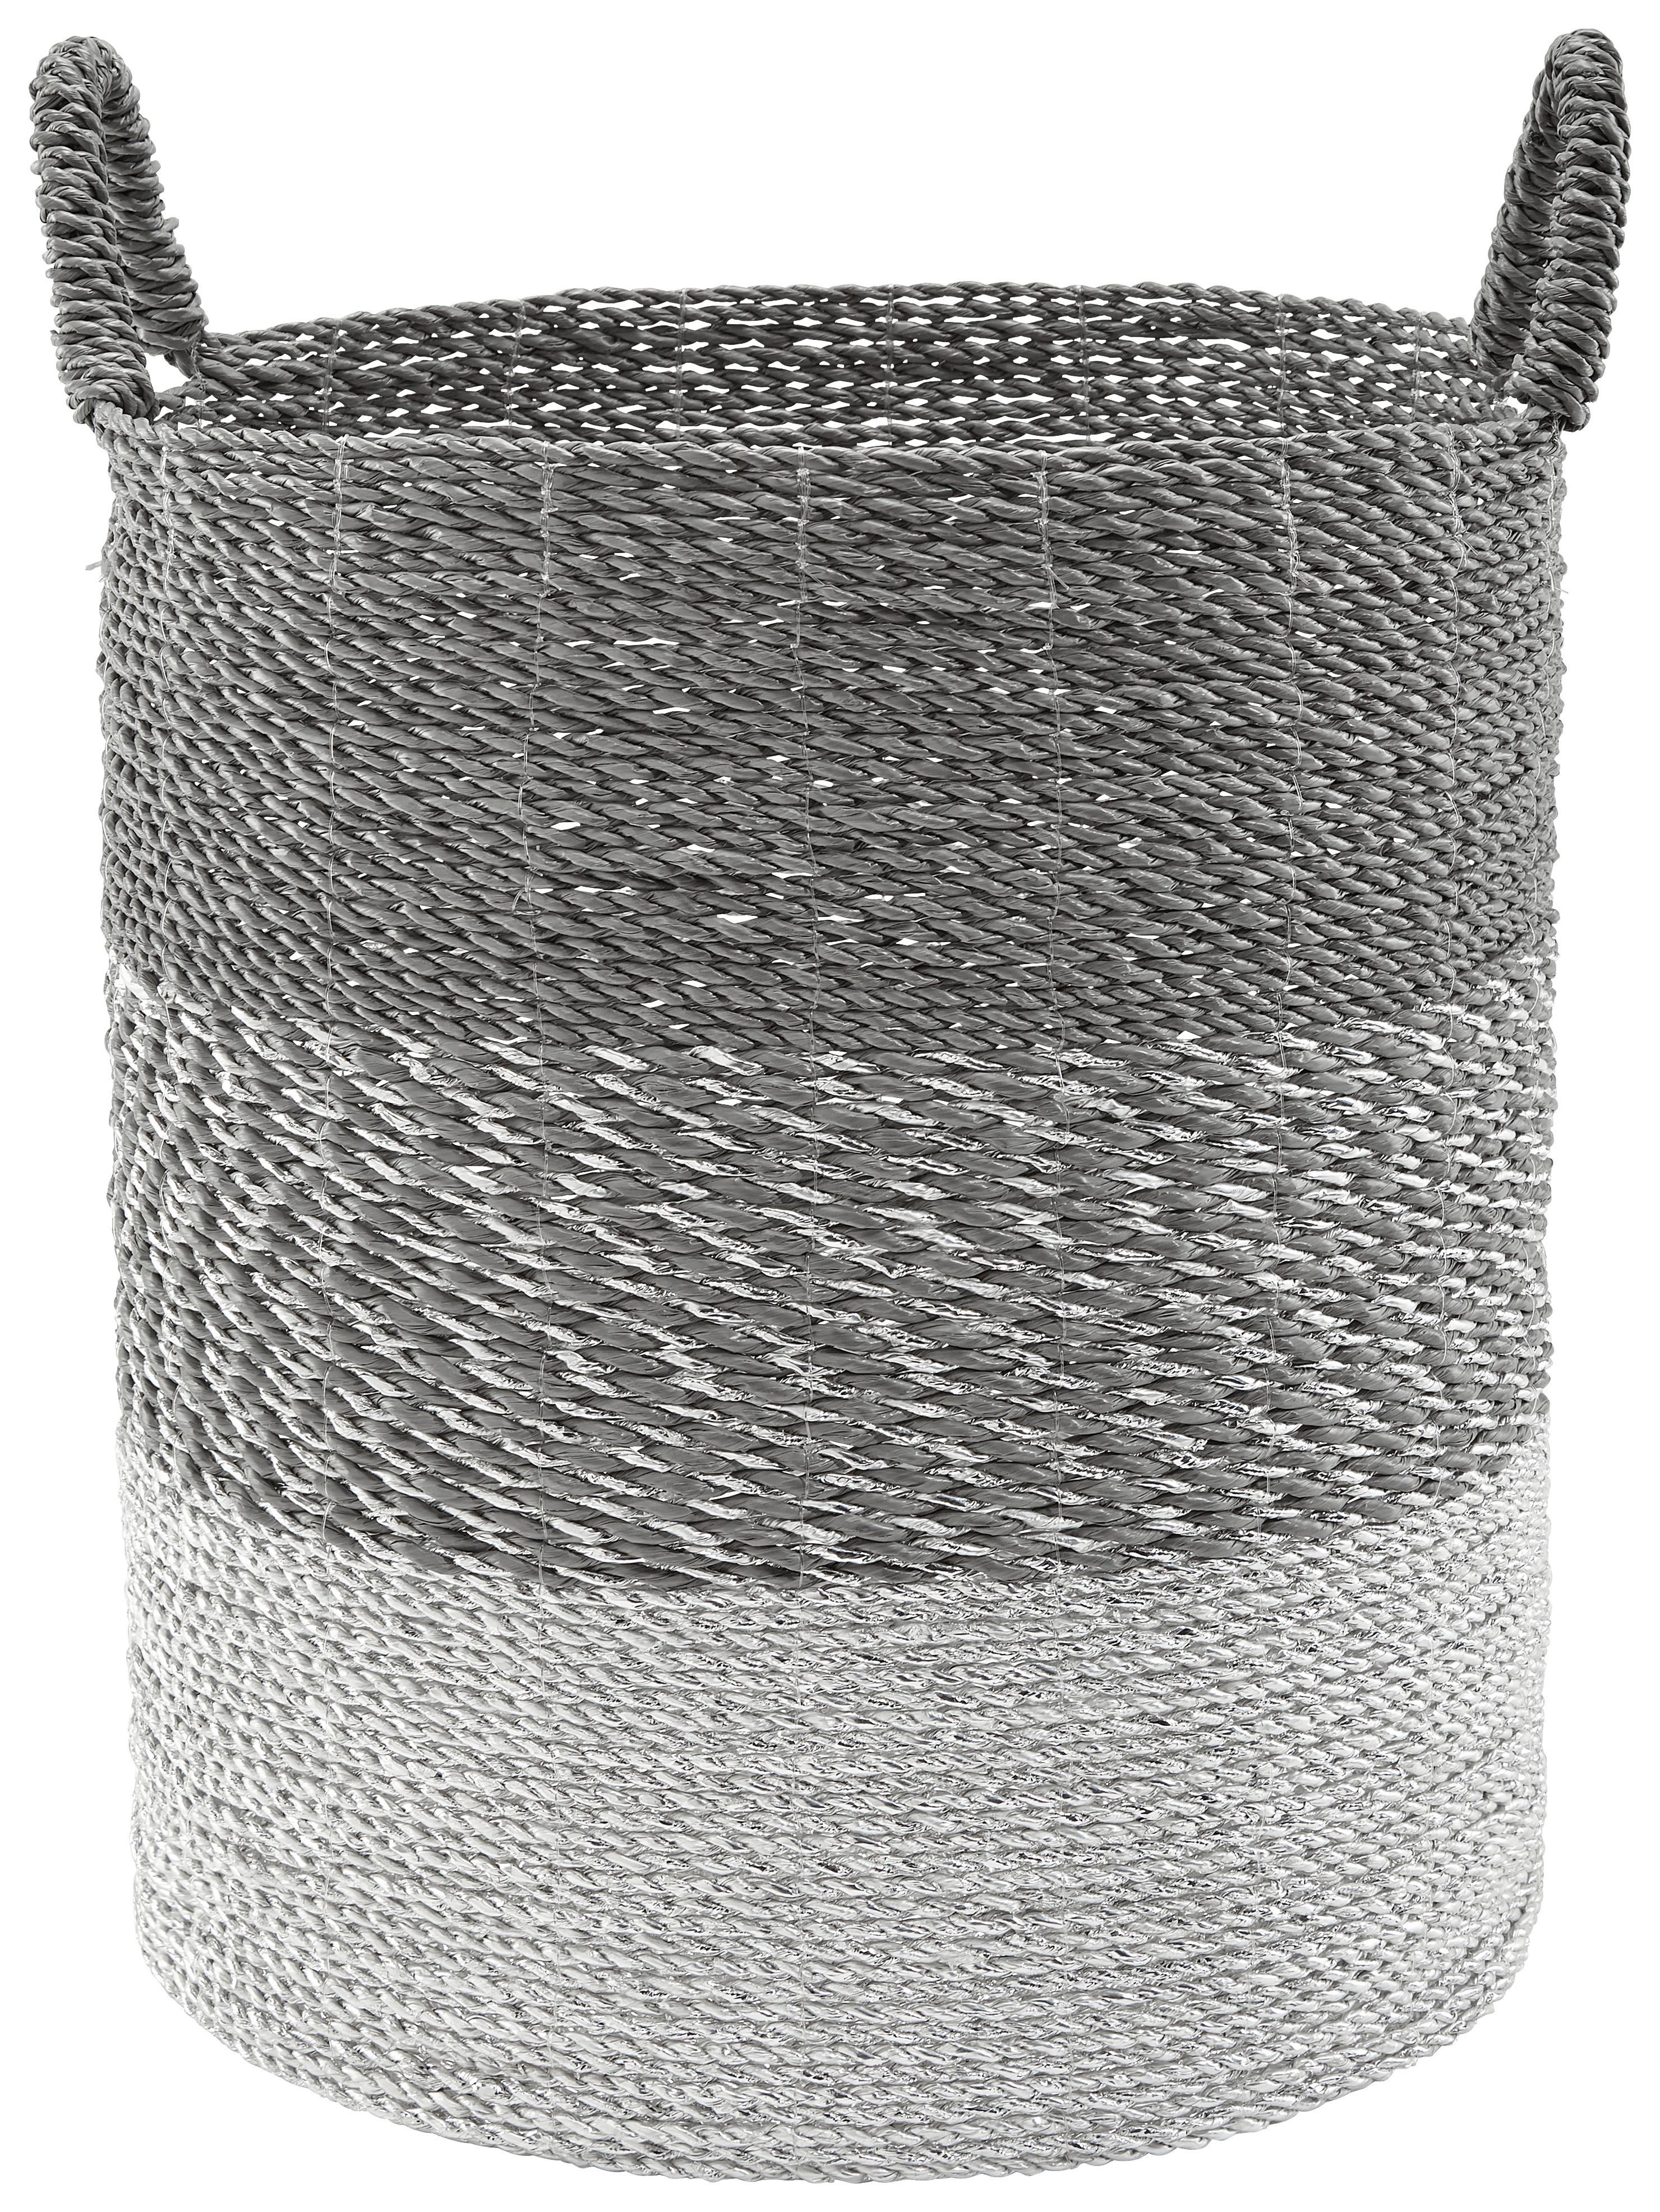 Korb Shannon in Grau Höhe ca. 47 cm - Grau, MODERN, Kunststoff (41/47cm) - Bessagi Home